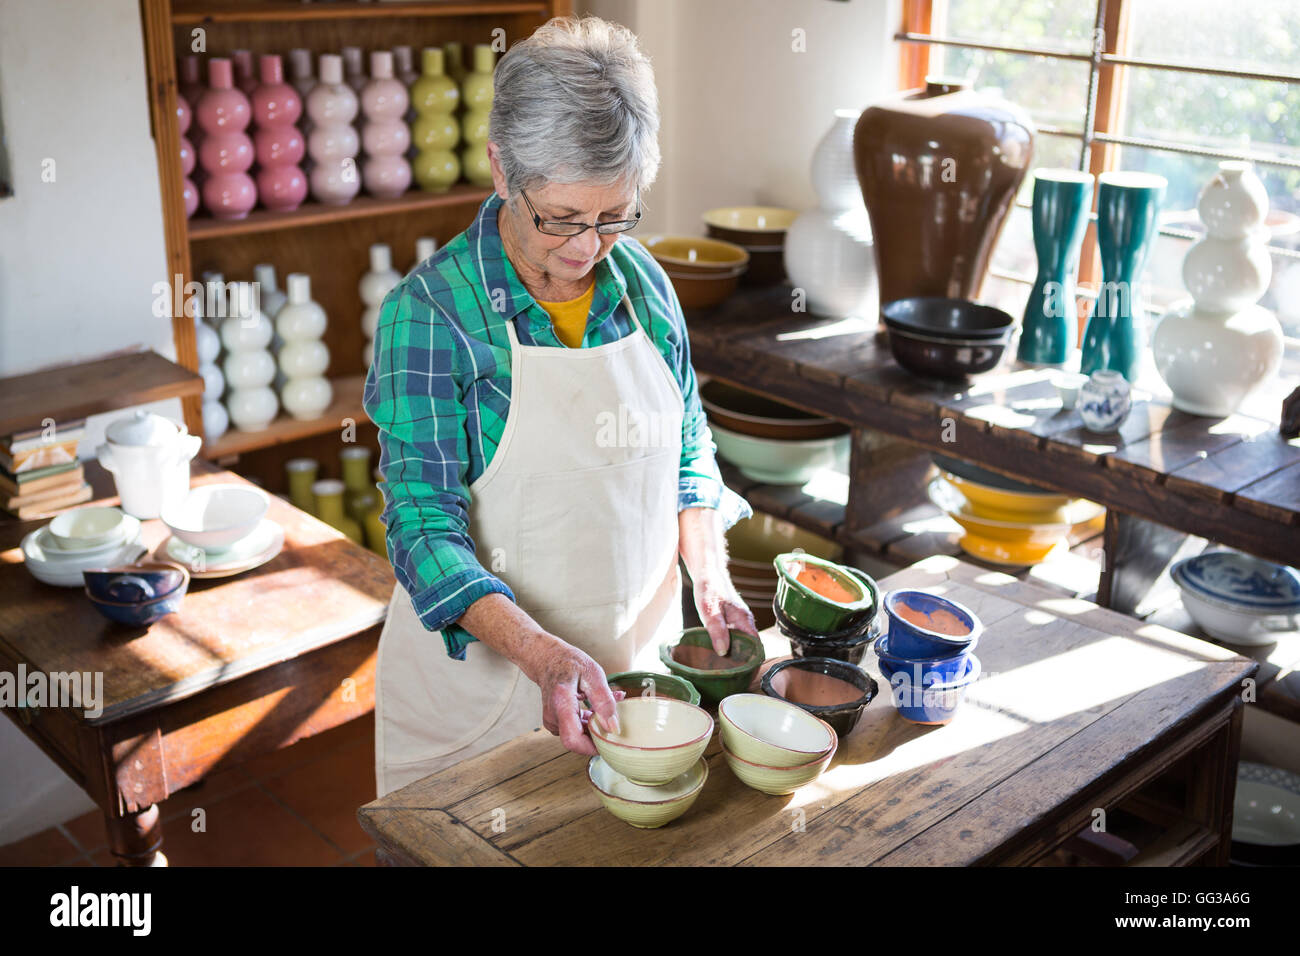 Female potter arranging bowl on worktop Stock Photo